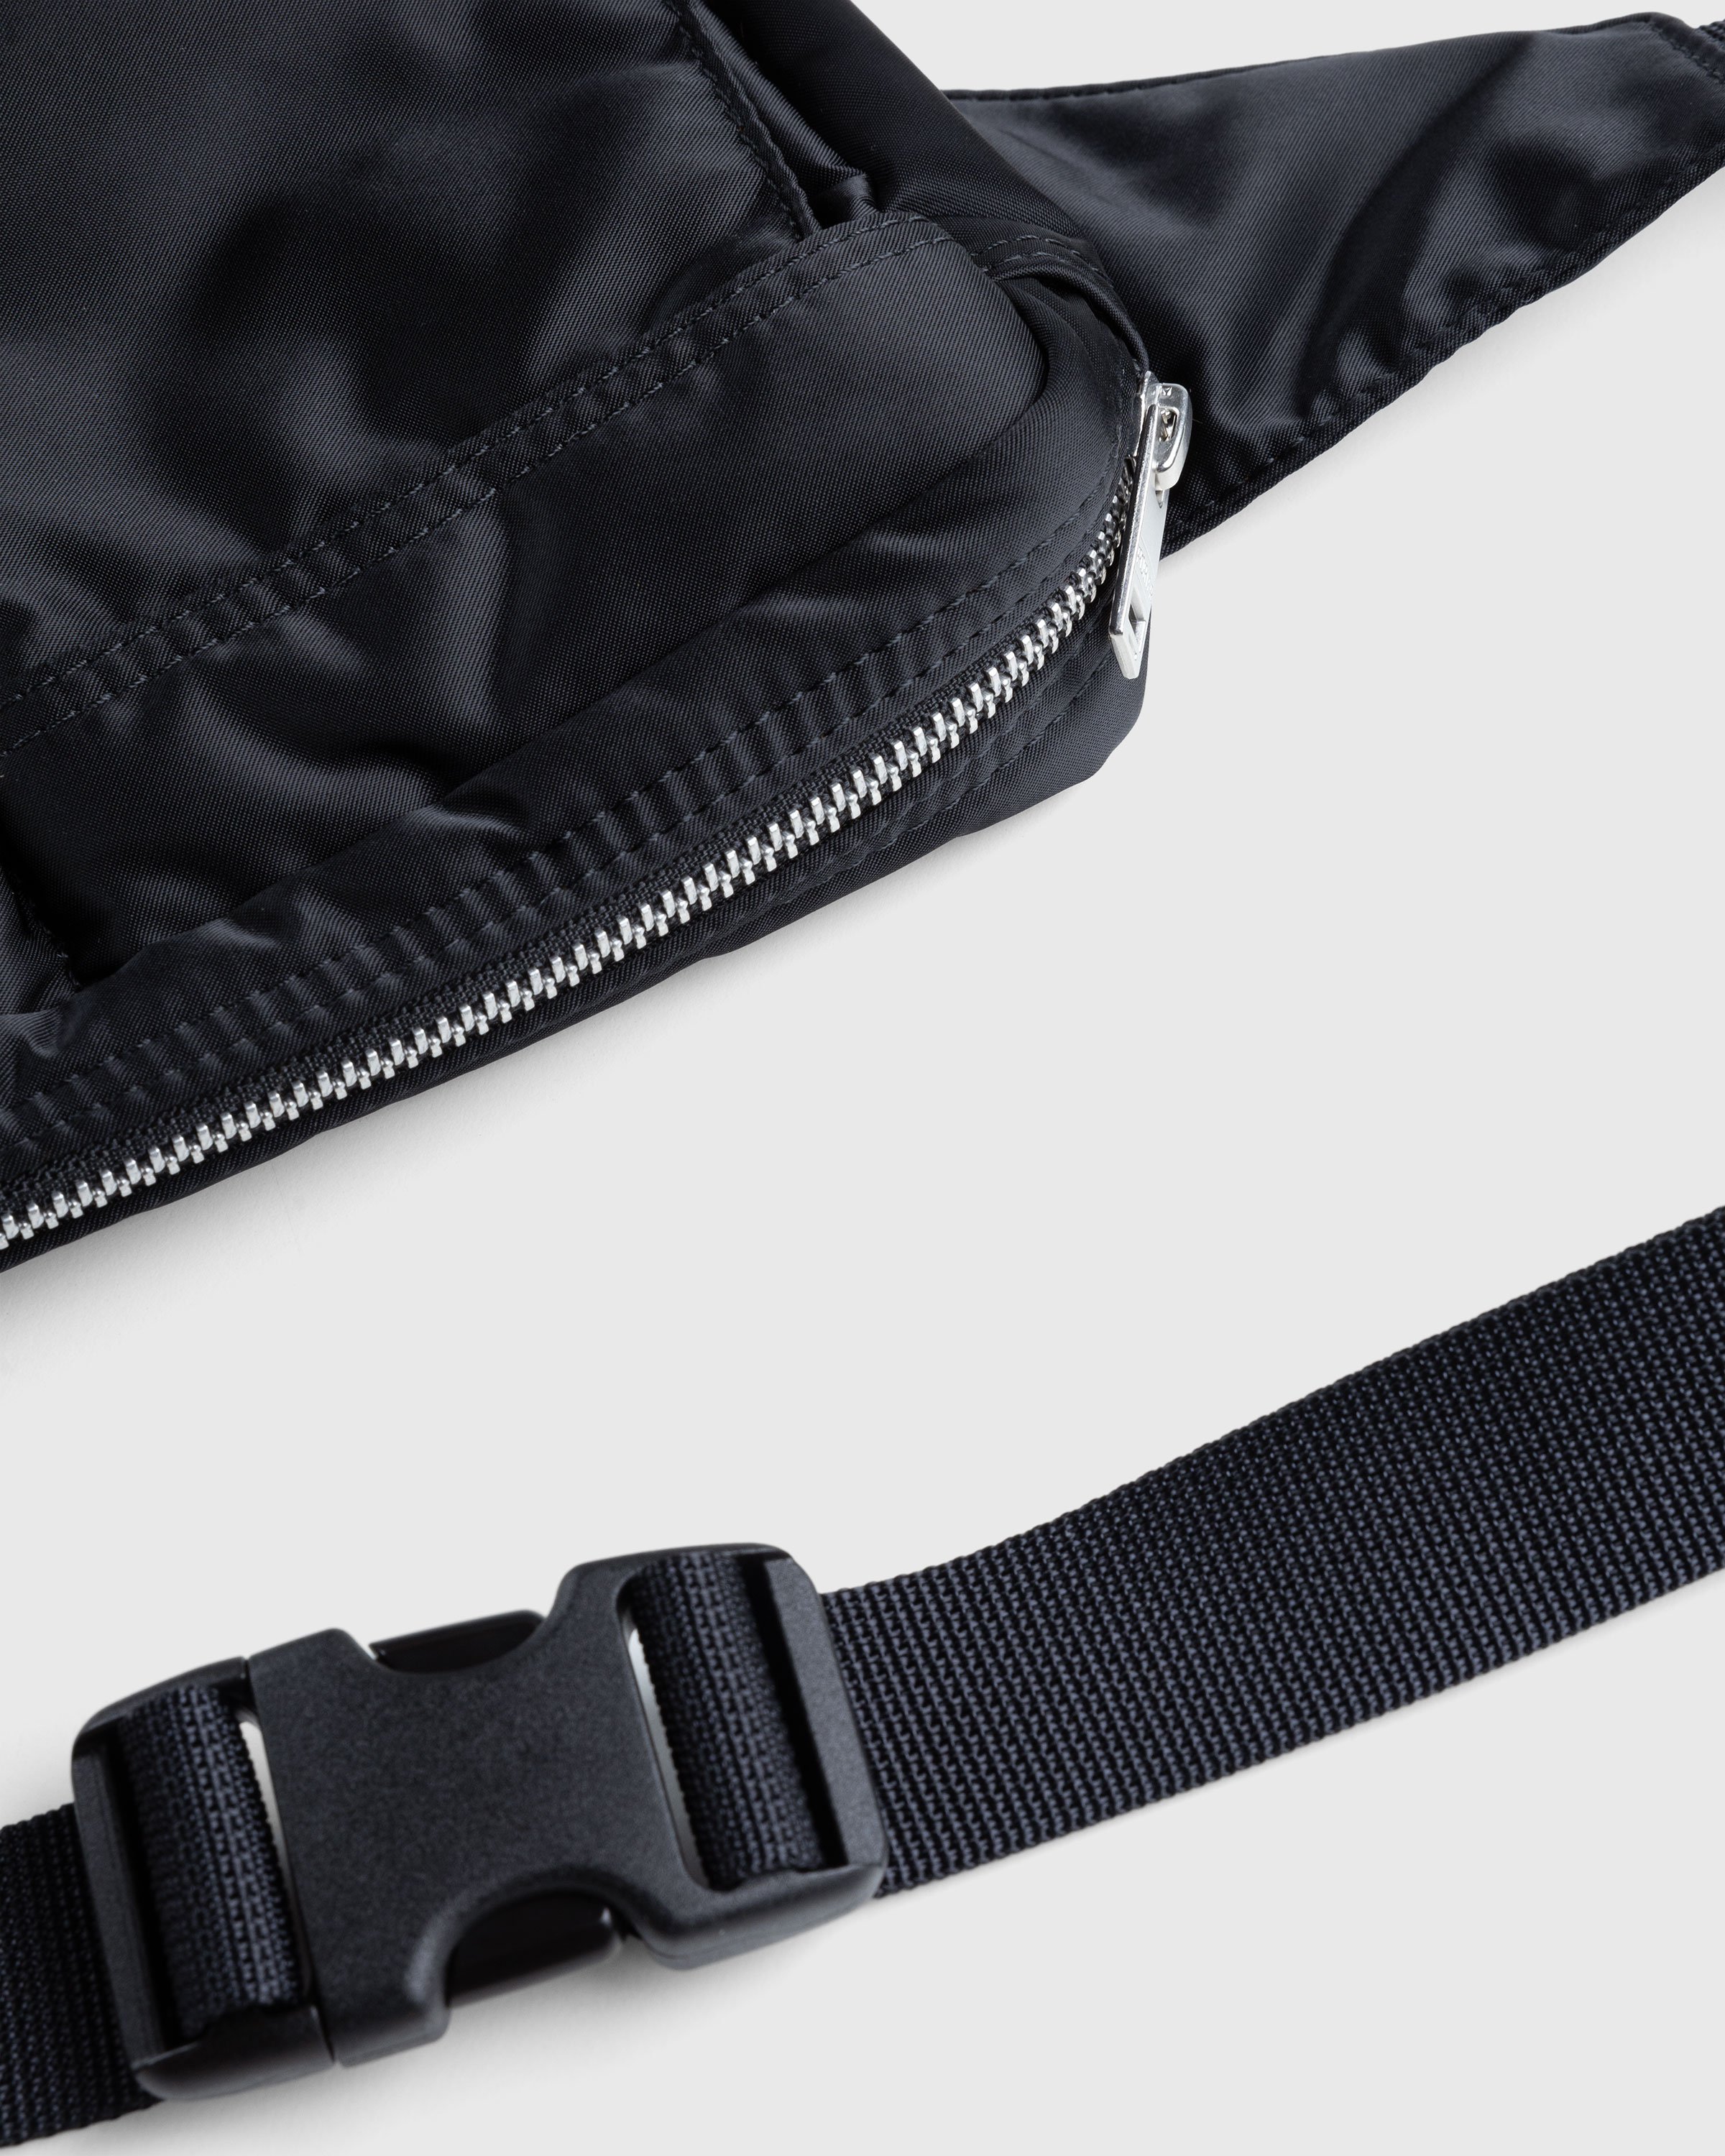 Porter-Yoshida & Co. - Tanker Waist Bag Black - Accessories - Black - Image 4